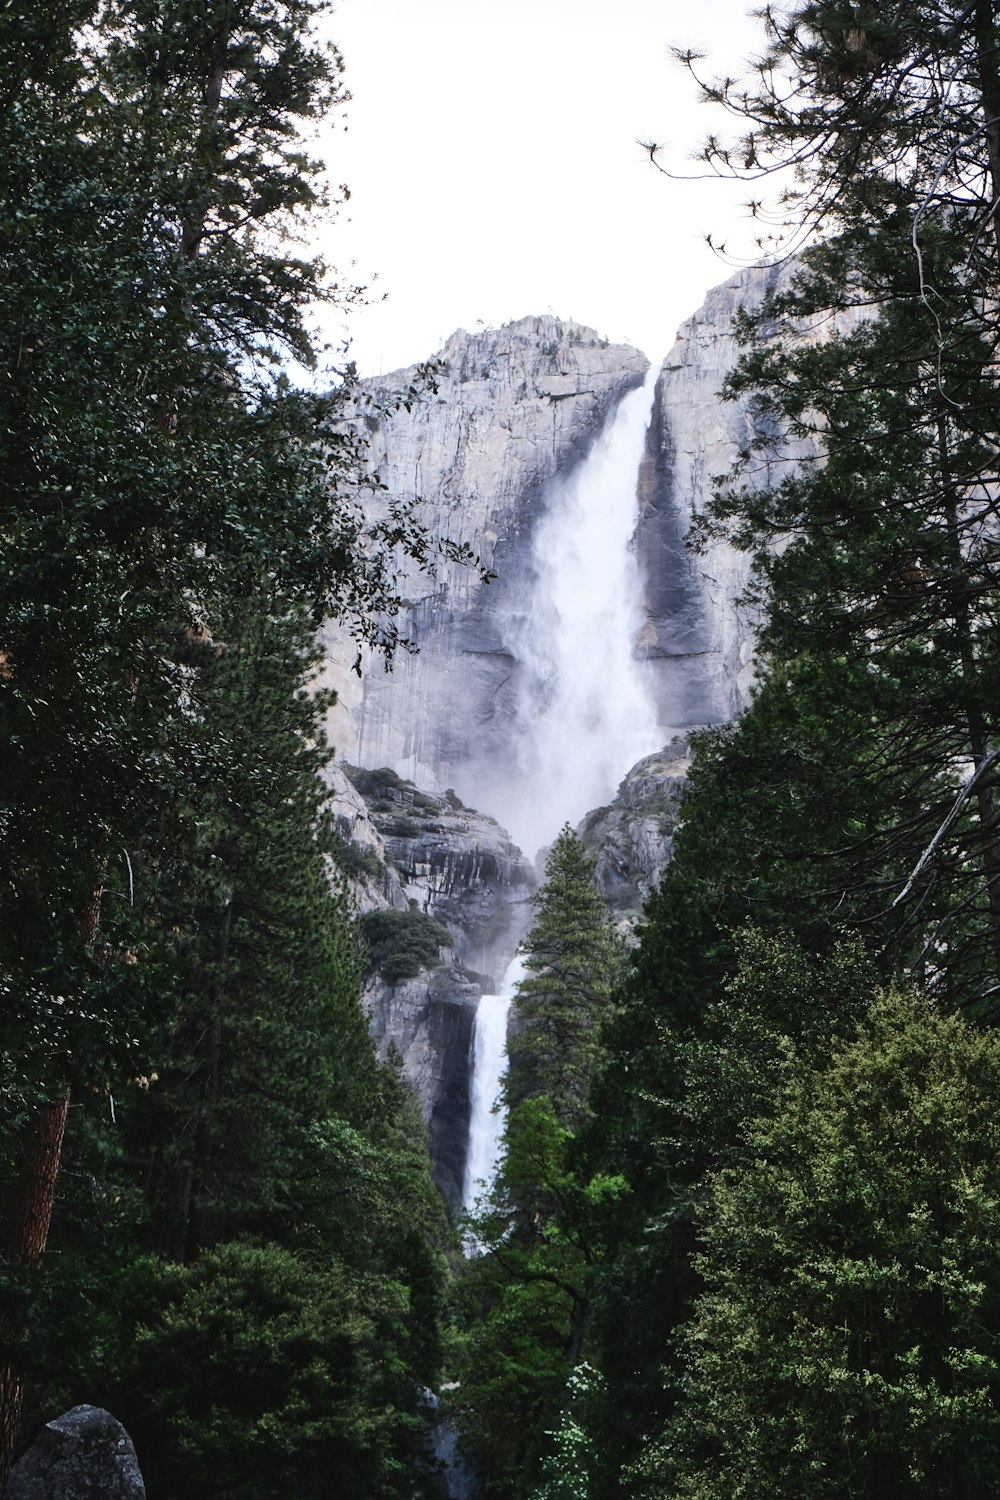 water falls near trees